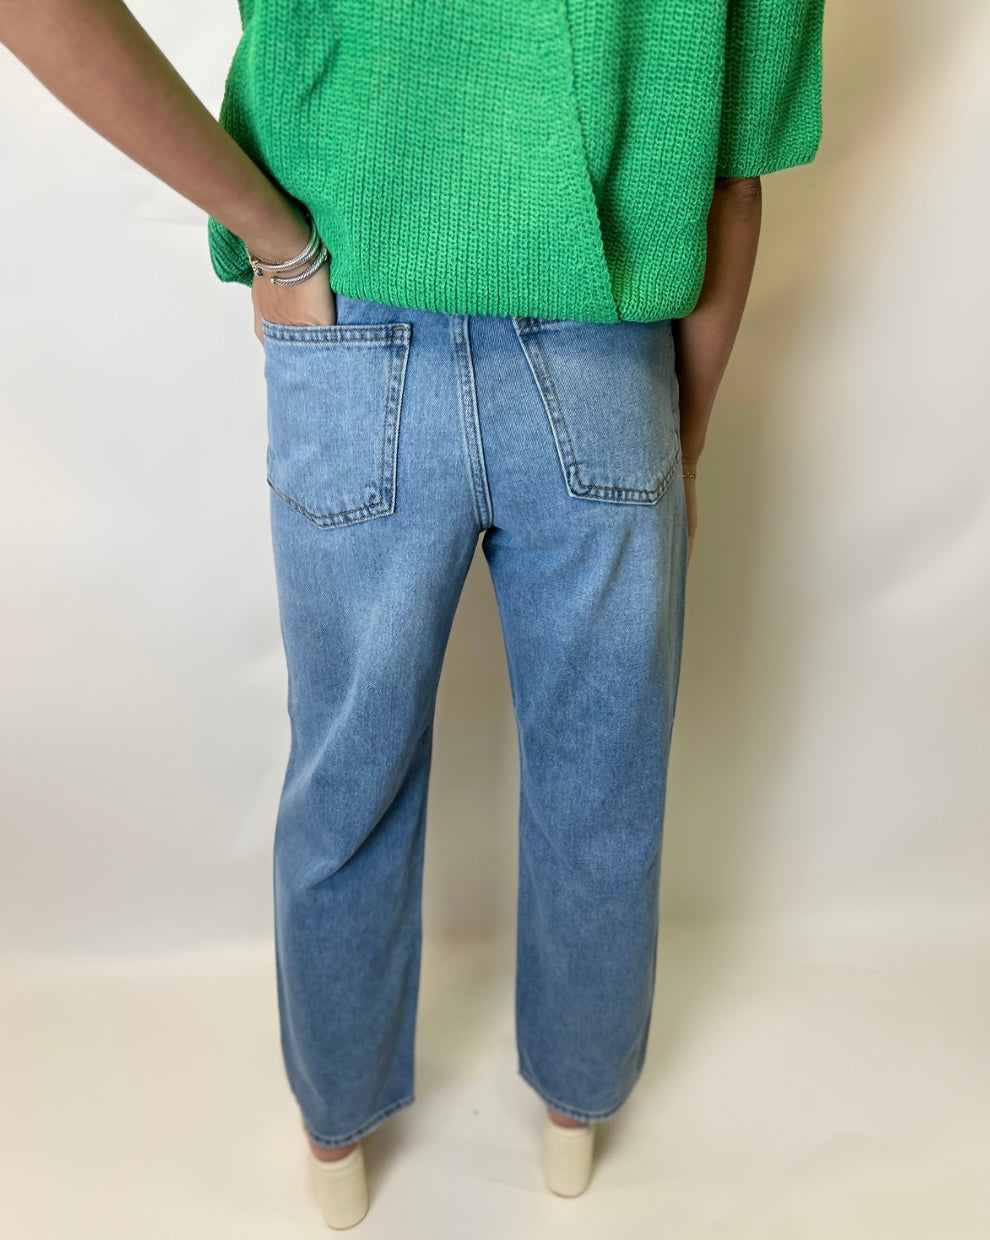 90's Decked in Denim Jeans